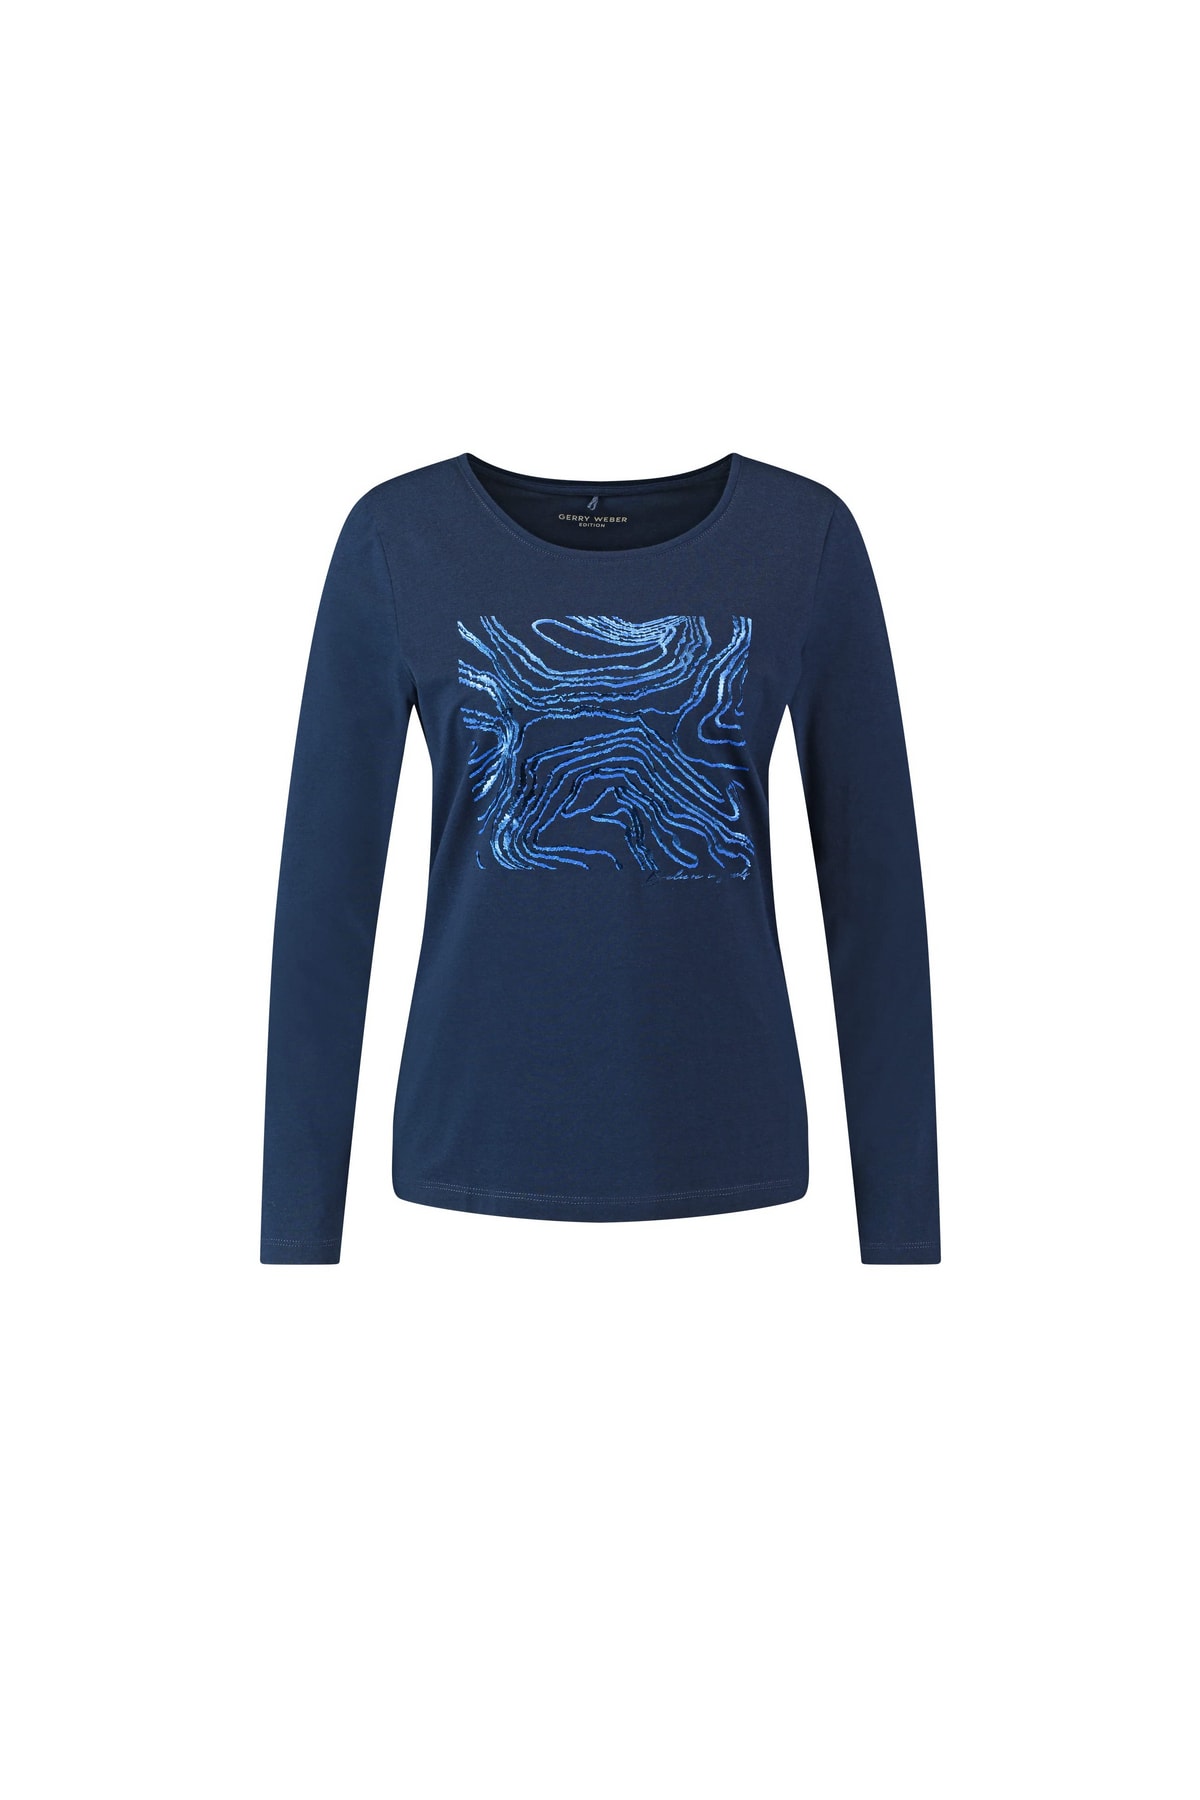 Gerry Weber Sweatshirt Blau Regular Fit Fast ausverkauft